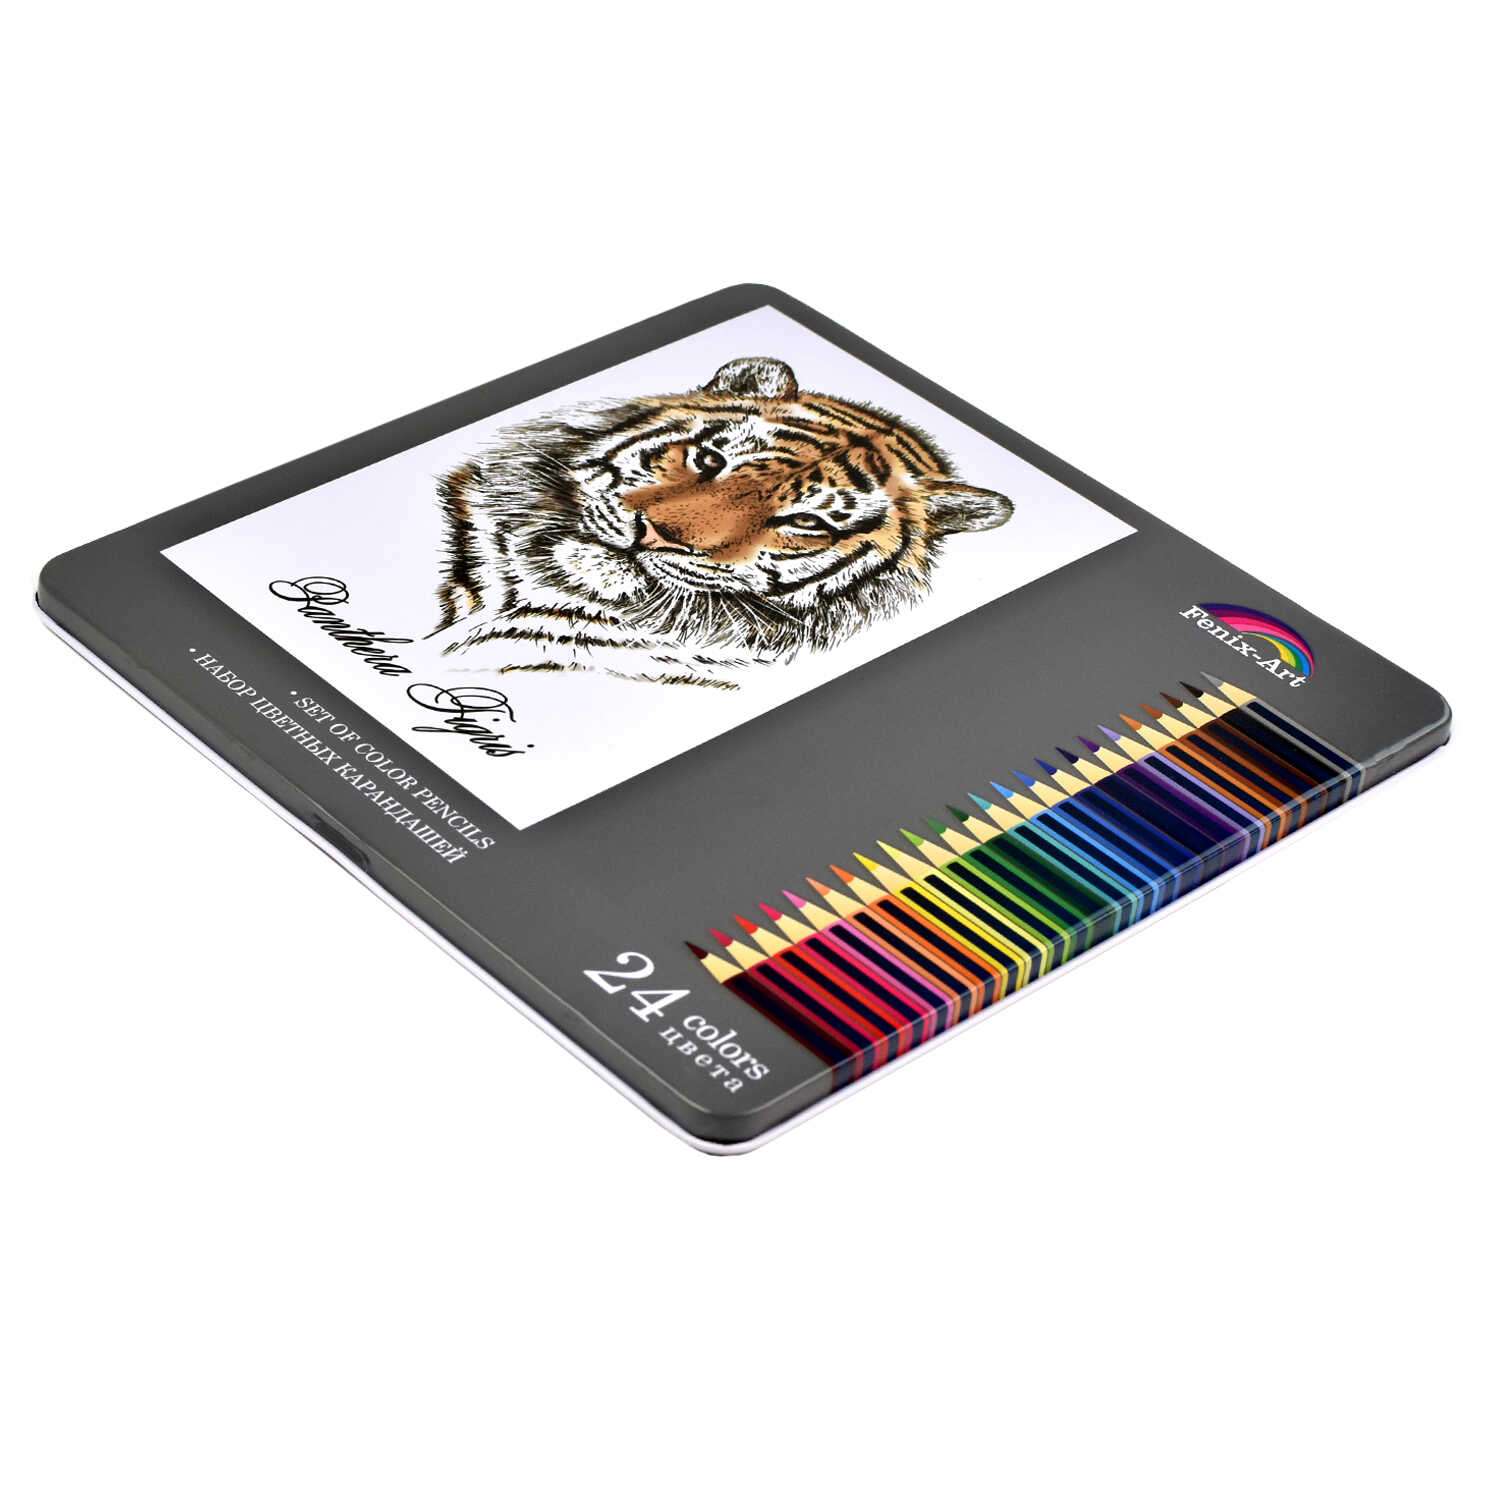 Цветные карандаши ФЕНИКС+ Тигр 24 цвета - фото 2